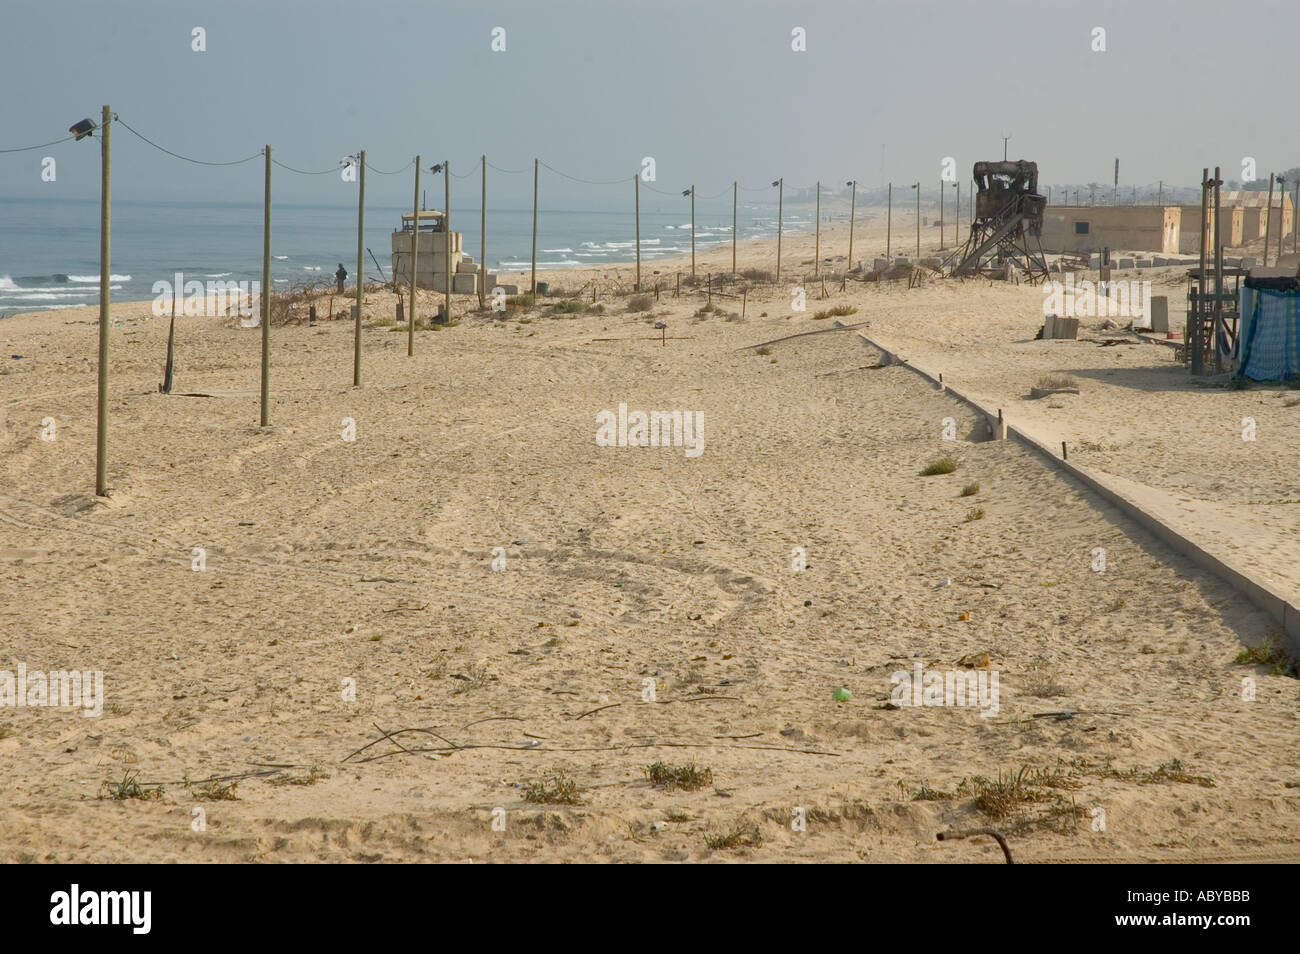 Isarel Gaza strip Gush Katif settlements Kfar Yam view of the beach with row of lamposts and military mirador Stock Photo